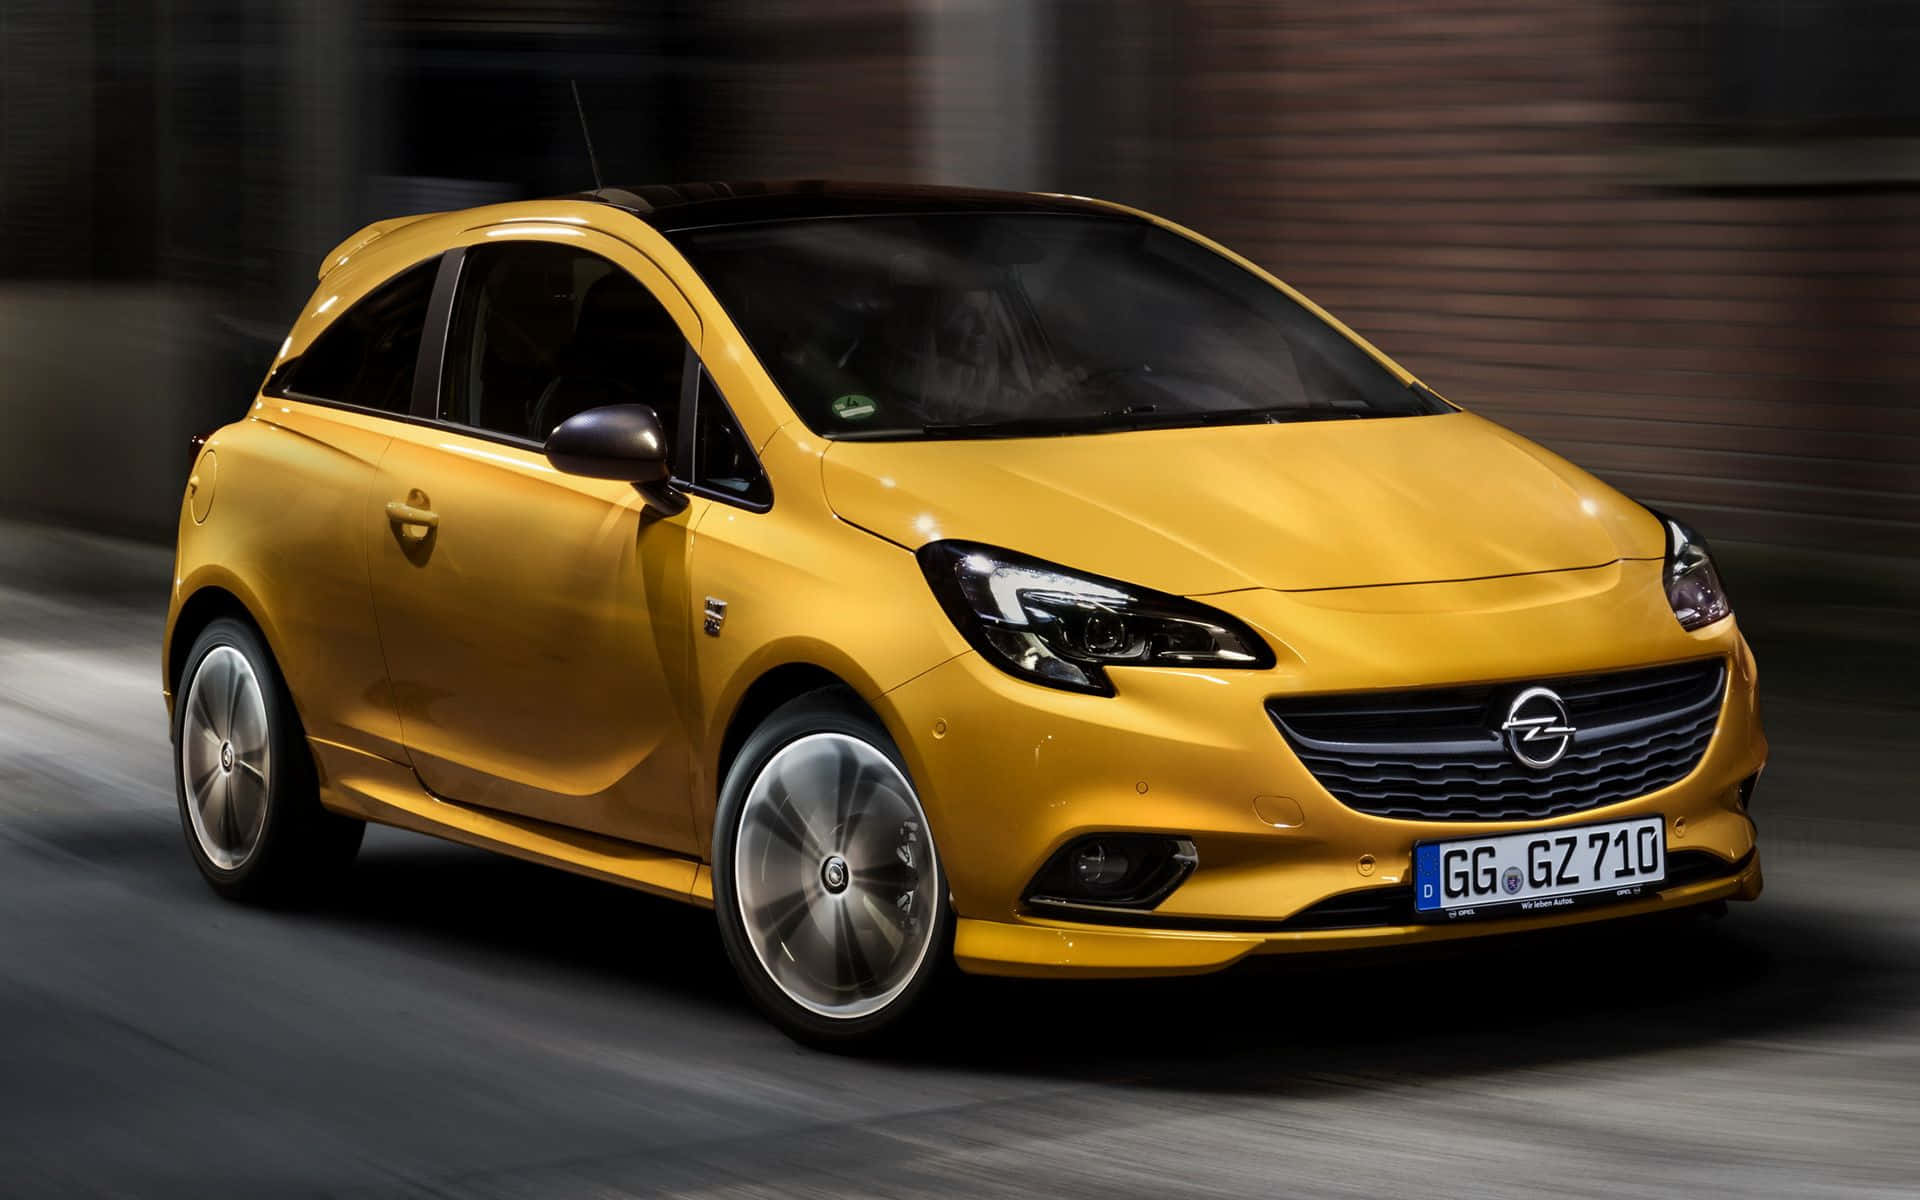 Sleek Opel Corsa In Metallic Finish Wallpaper